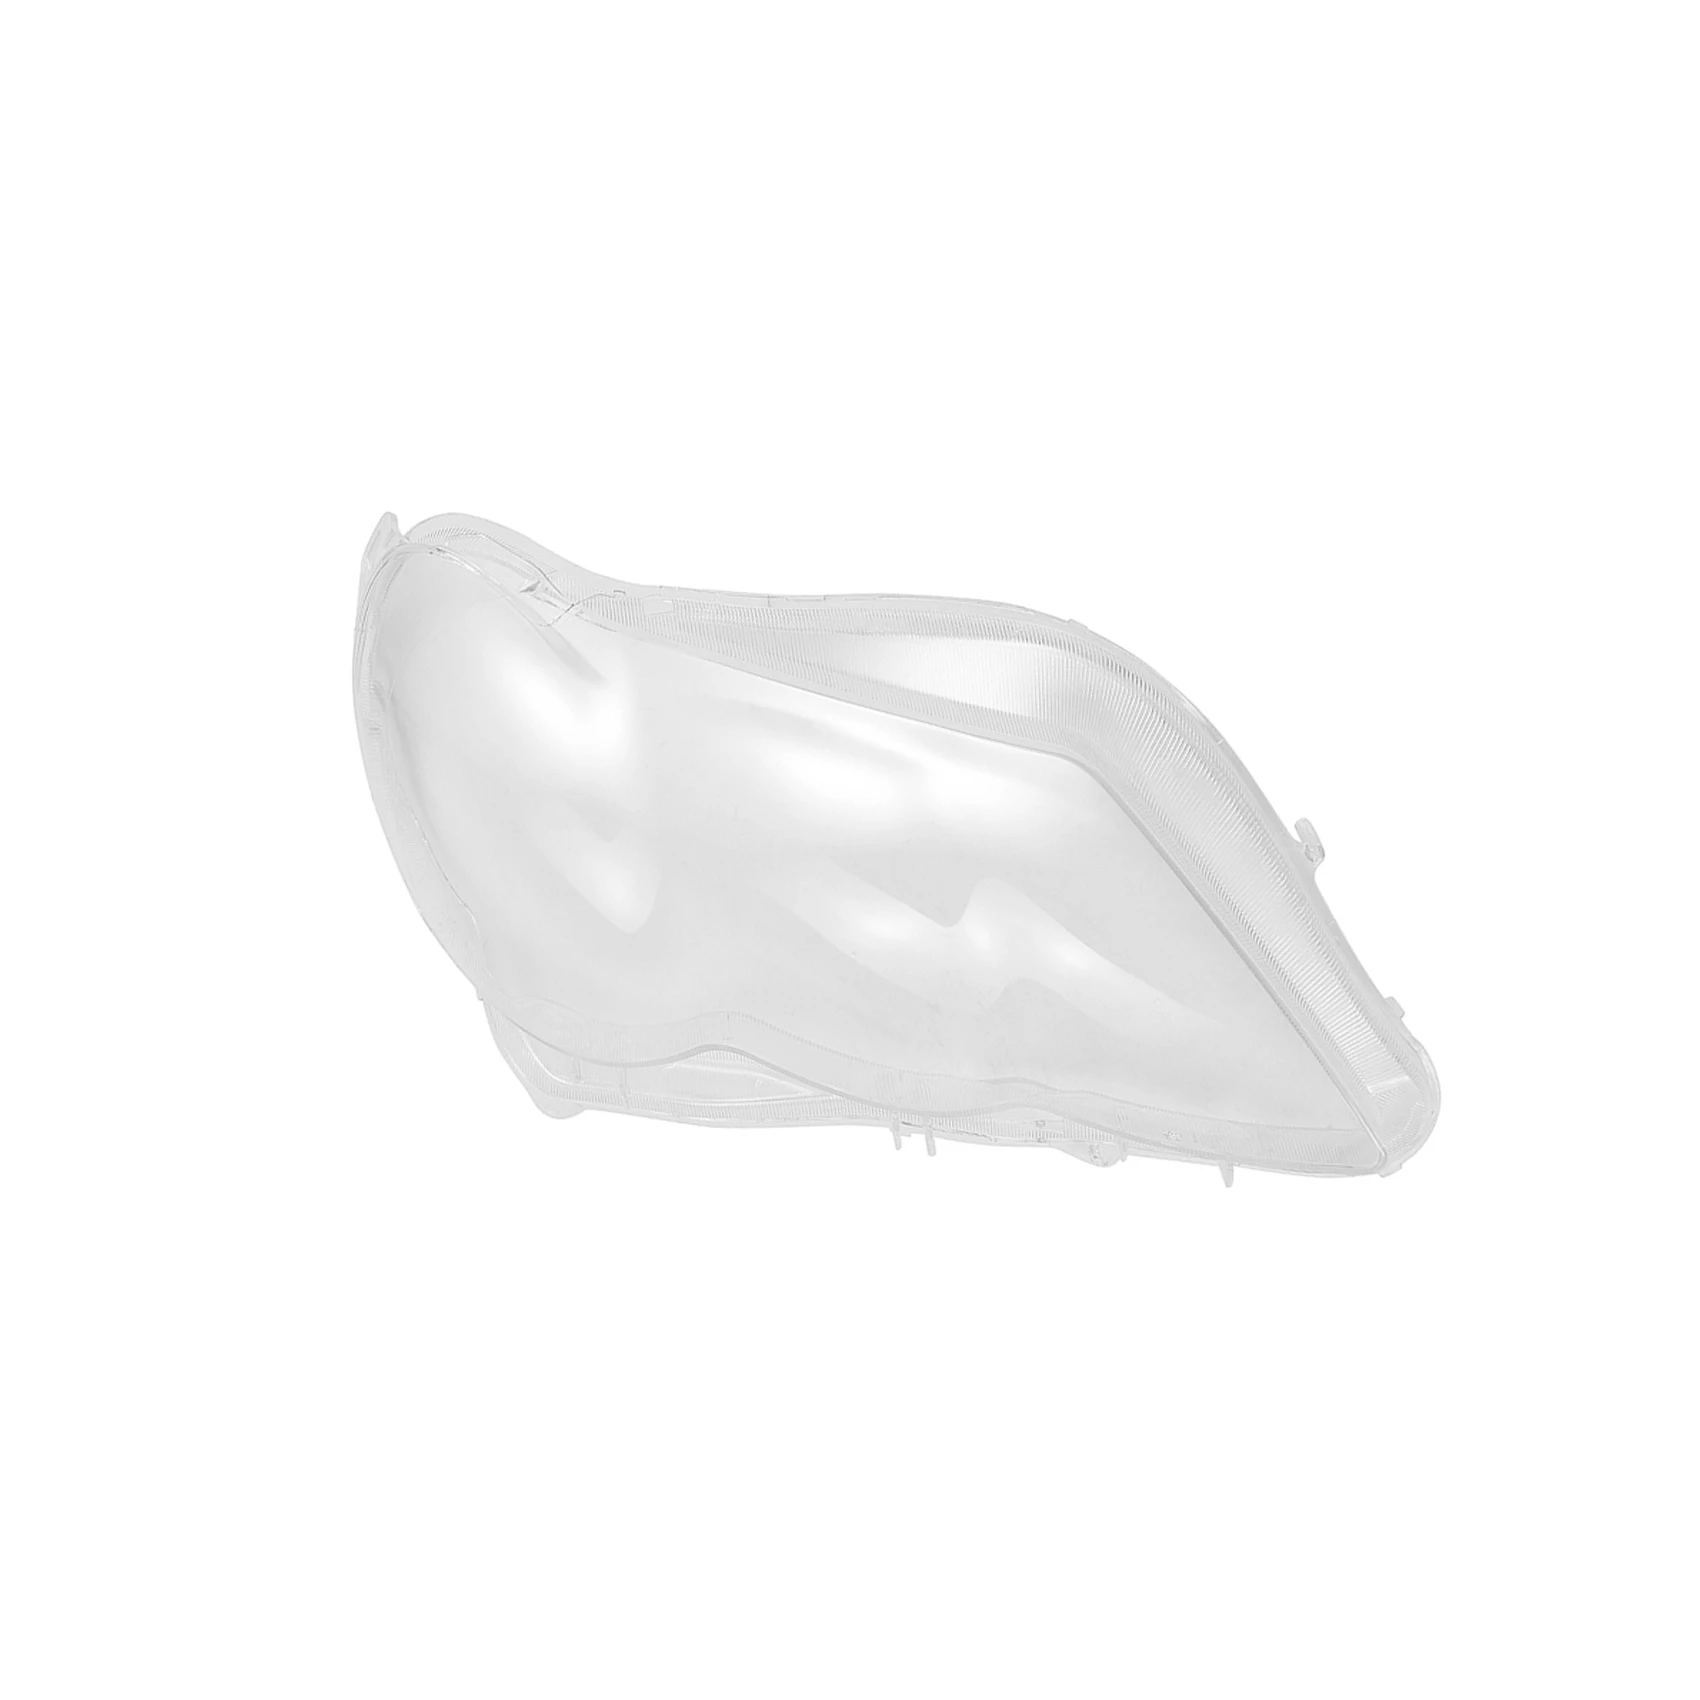 

Правая боковая крышка автомобильной фары, оболочка лампы, маска, абажур, объектив, стеклянная крышка фары для 2005-2009